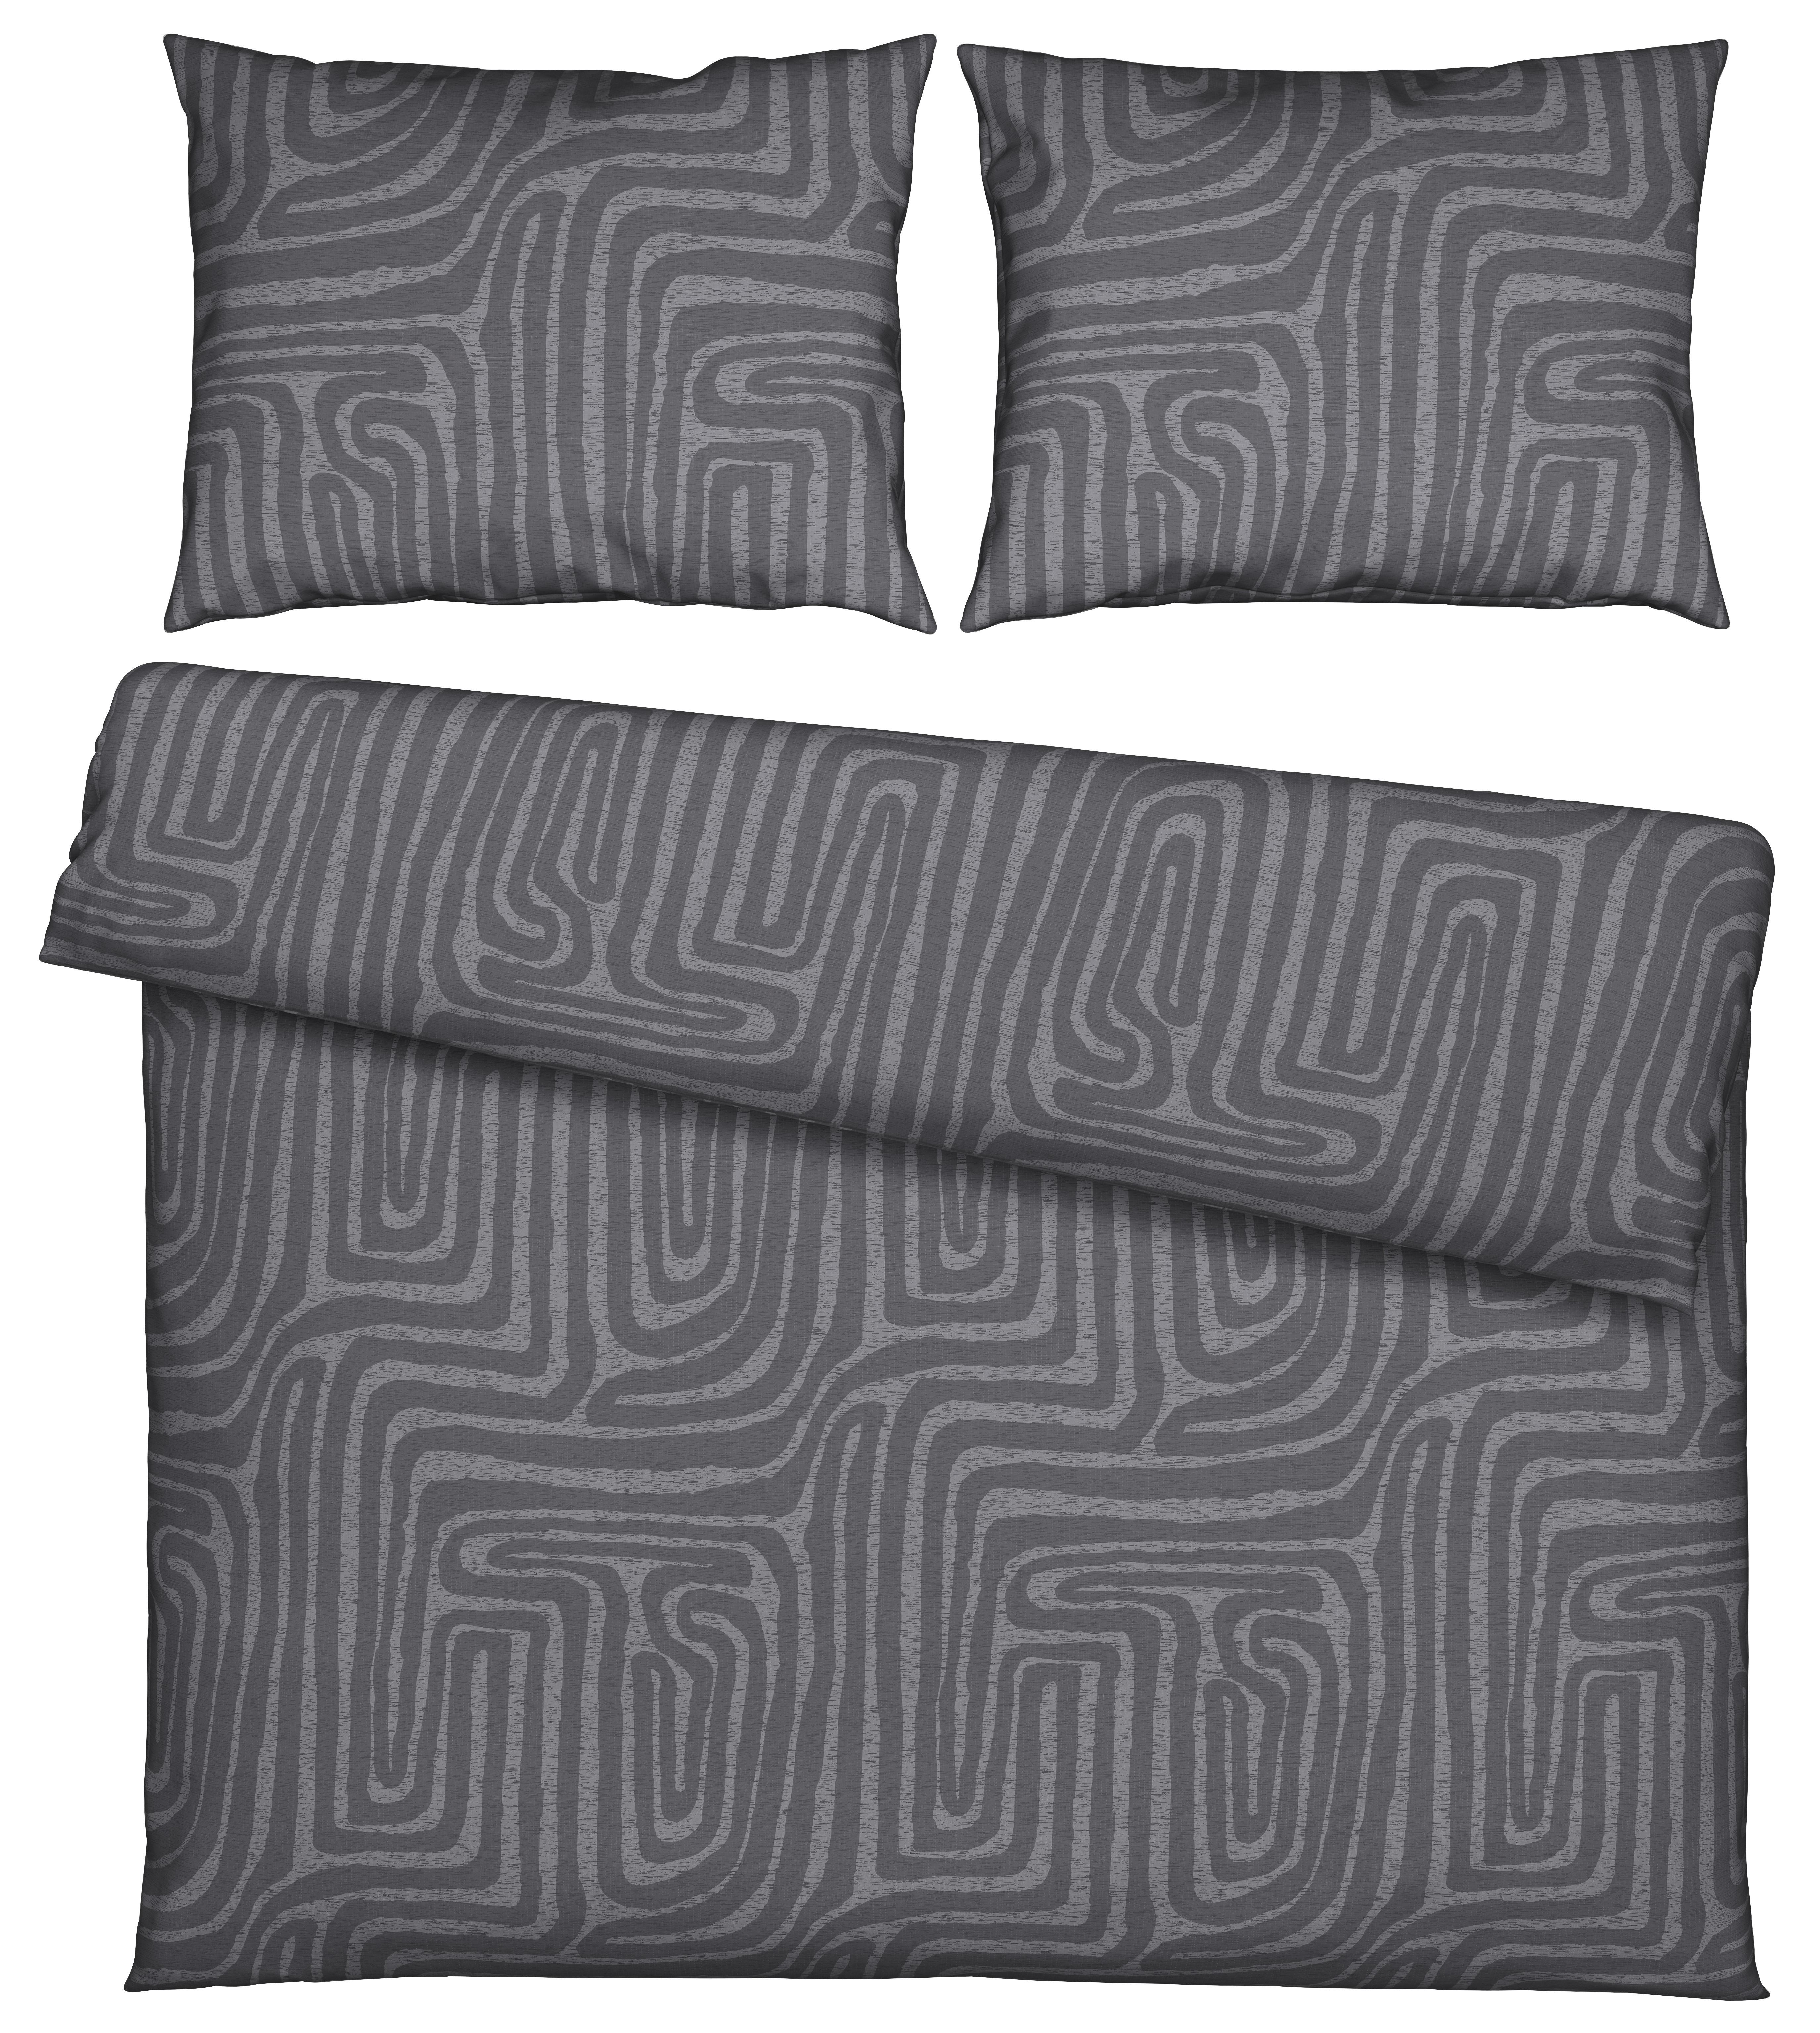 Posteljina Liam Xxl 2x70/90cm 200/220cm - siva, Modern, tekstil (200/220cm) - Modern Living